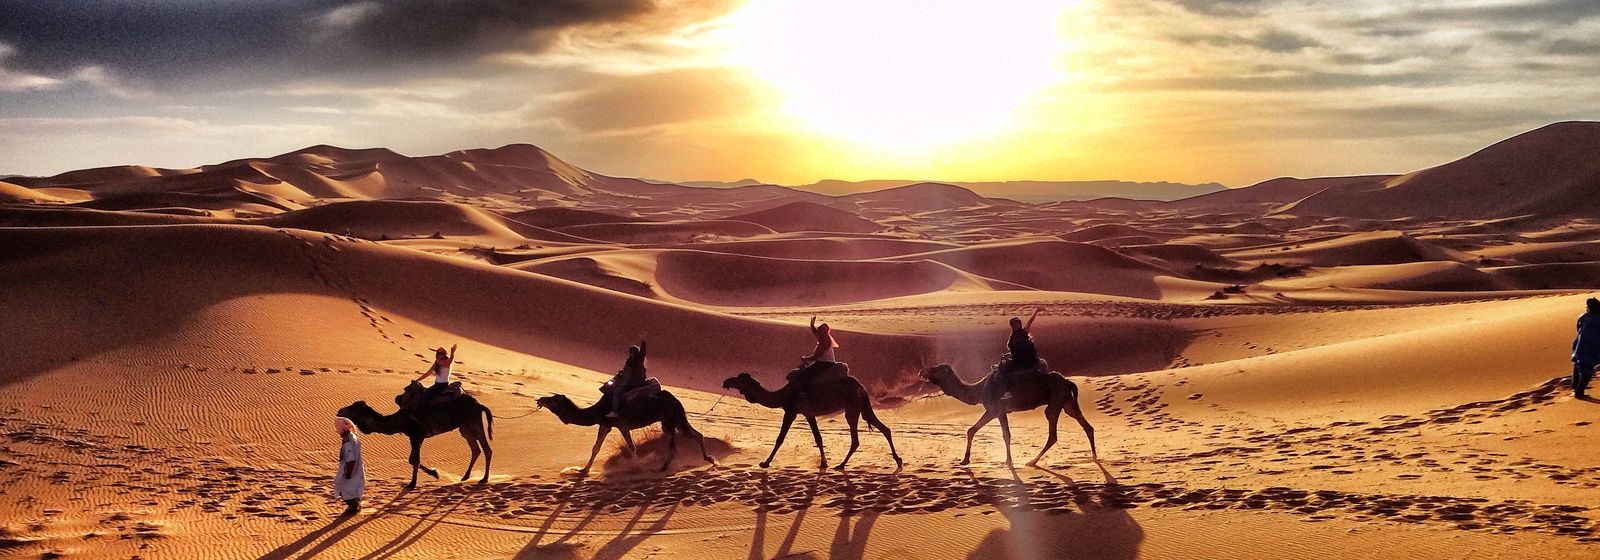 Paseo en Camello en el desierto de Merzouga